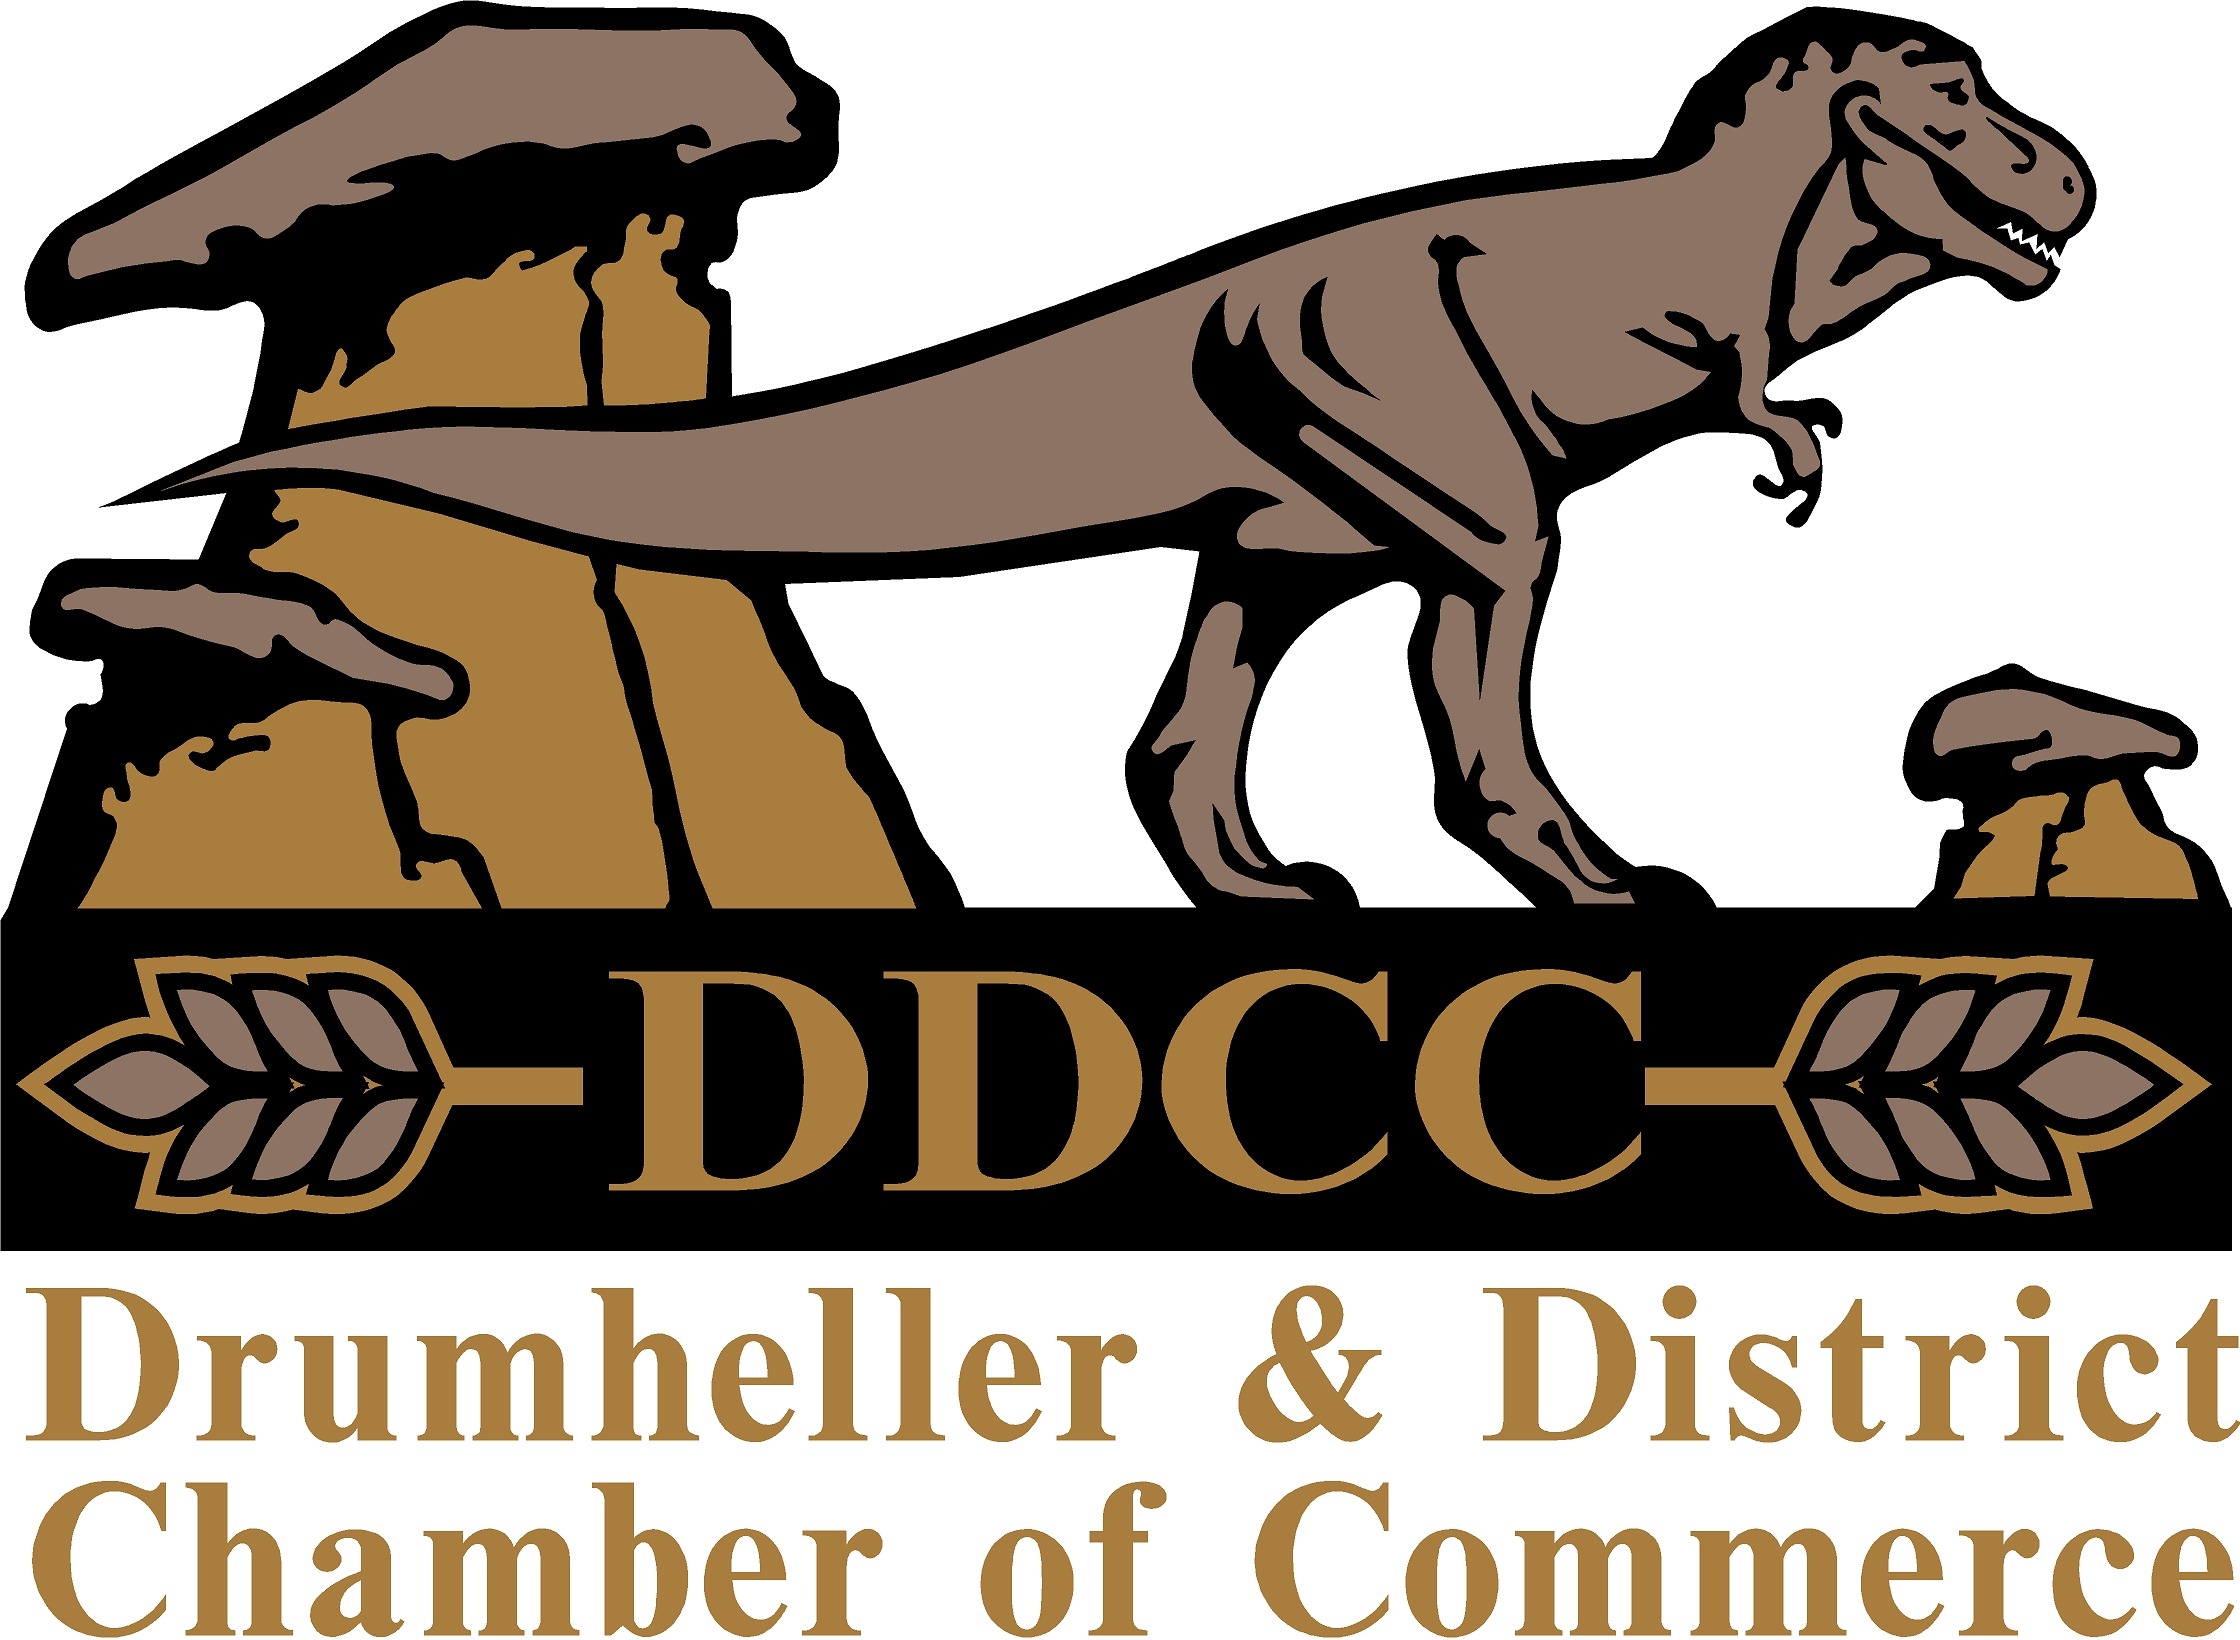 Drumheller & District Chamber of Commerce logo